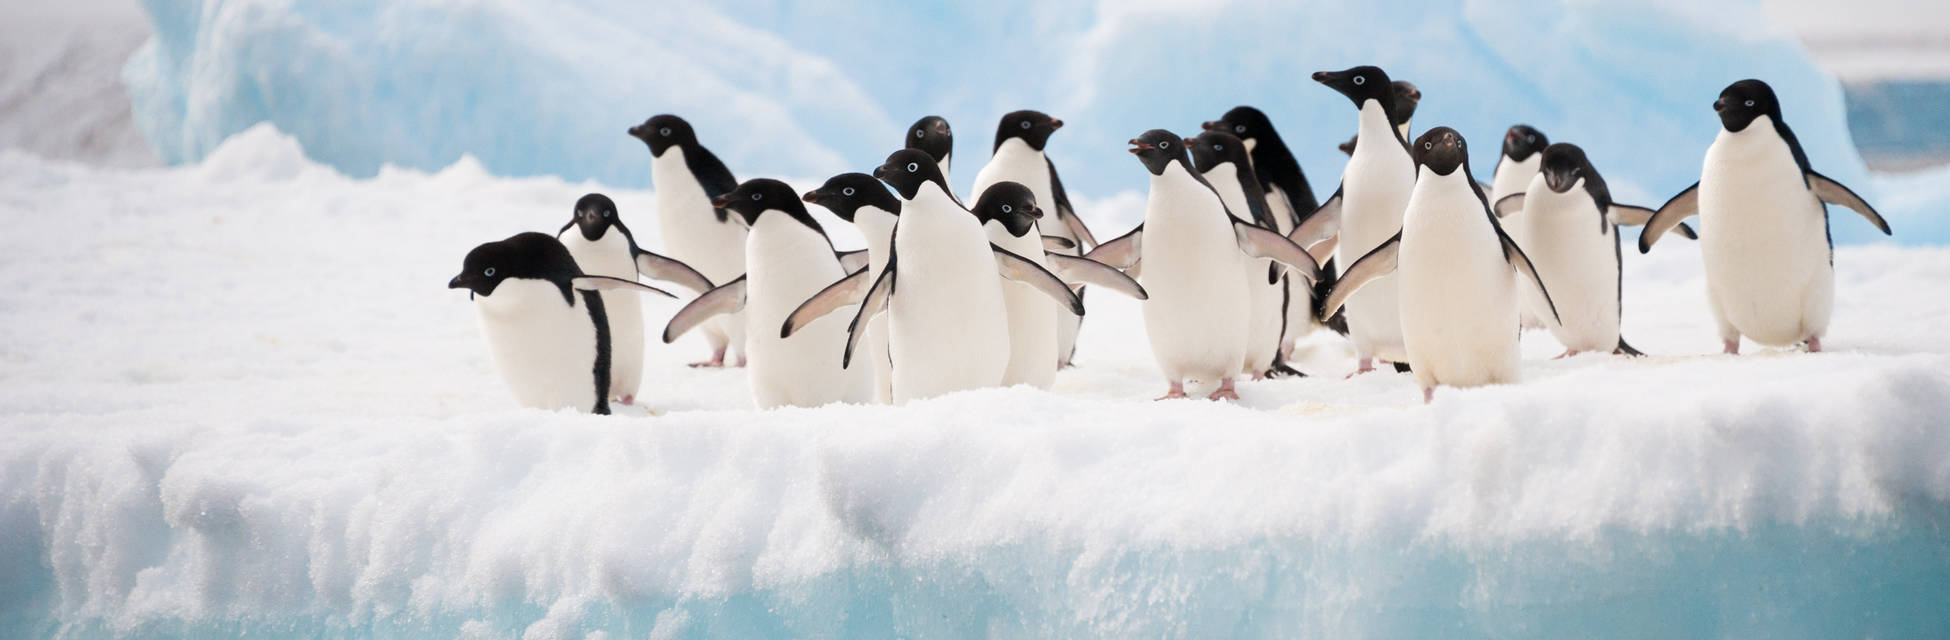 pinguins-Fotolia_46557859_XL.jpg